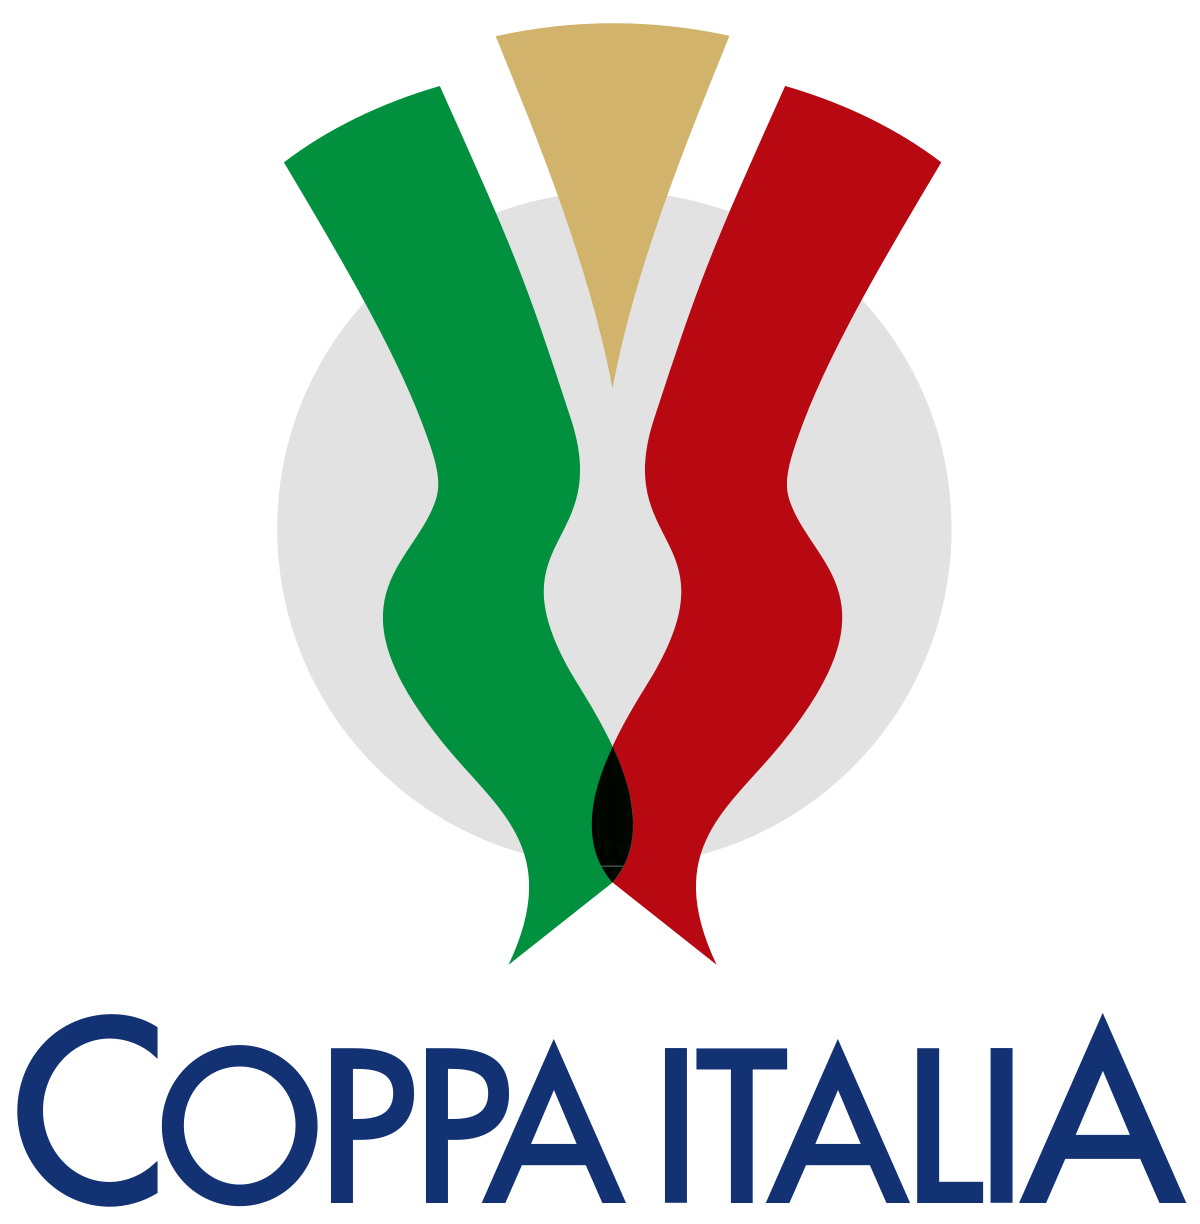 Кубок Италии (Coppa Italia)